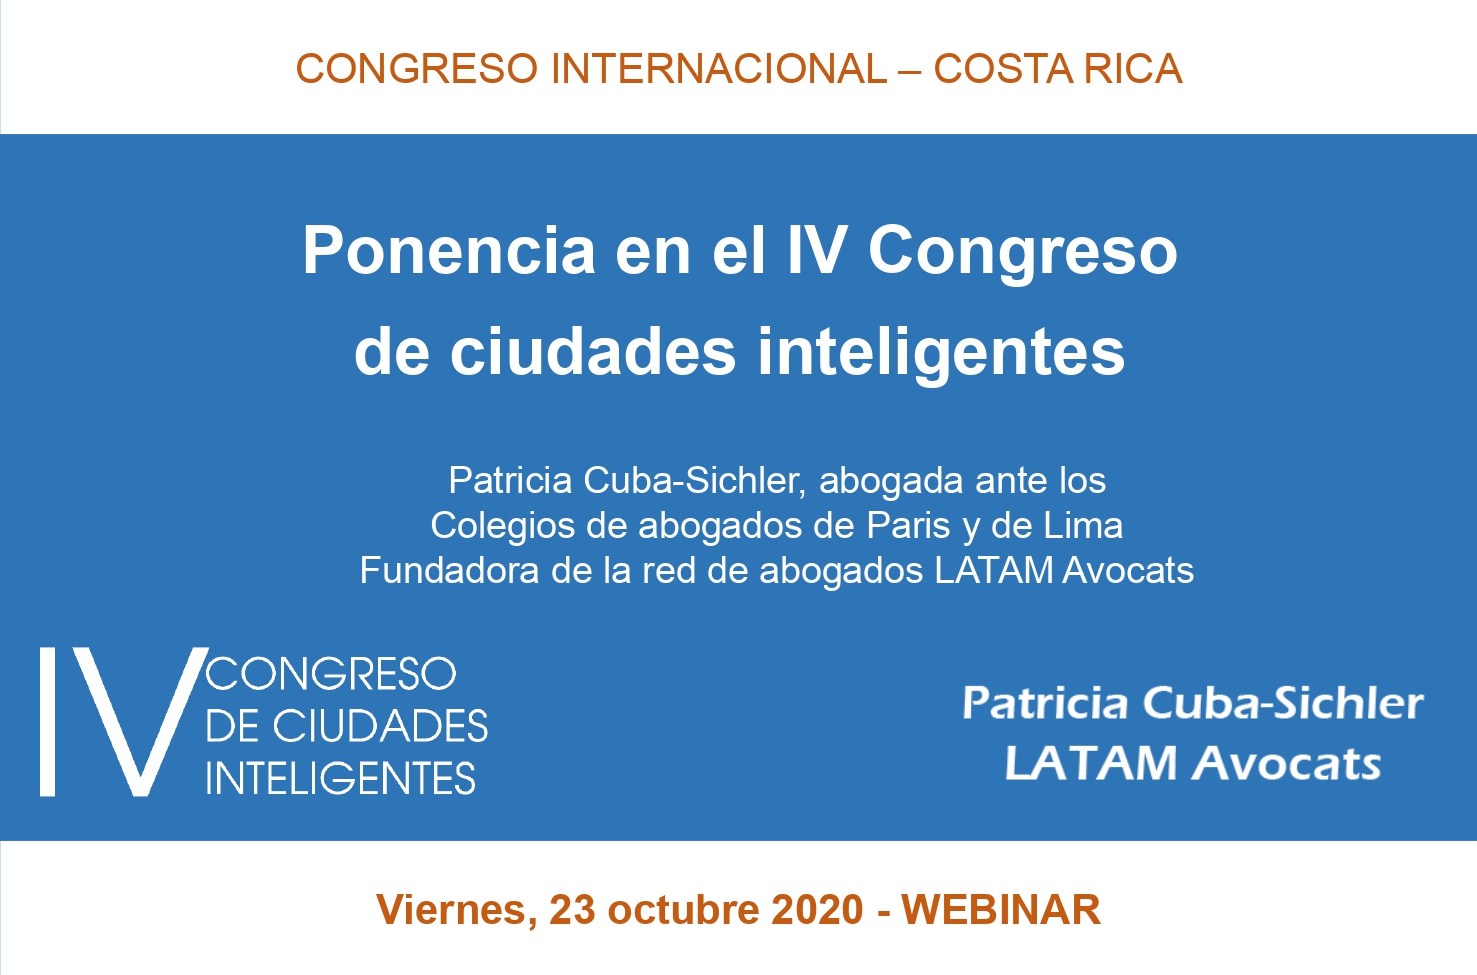 IV Congreso de ciudades inteligentes Costa Rica 2021